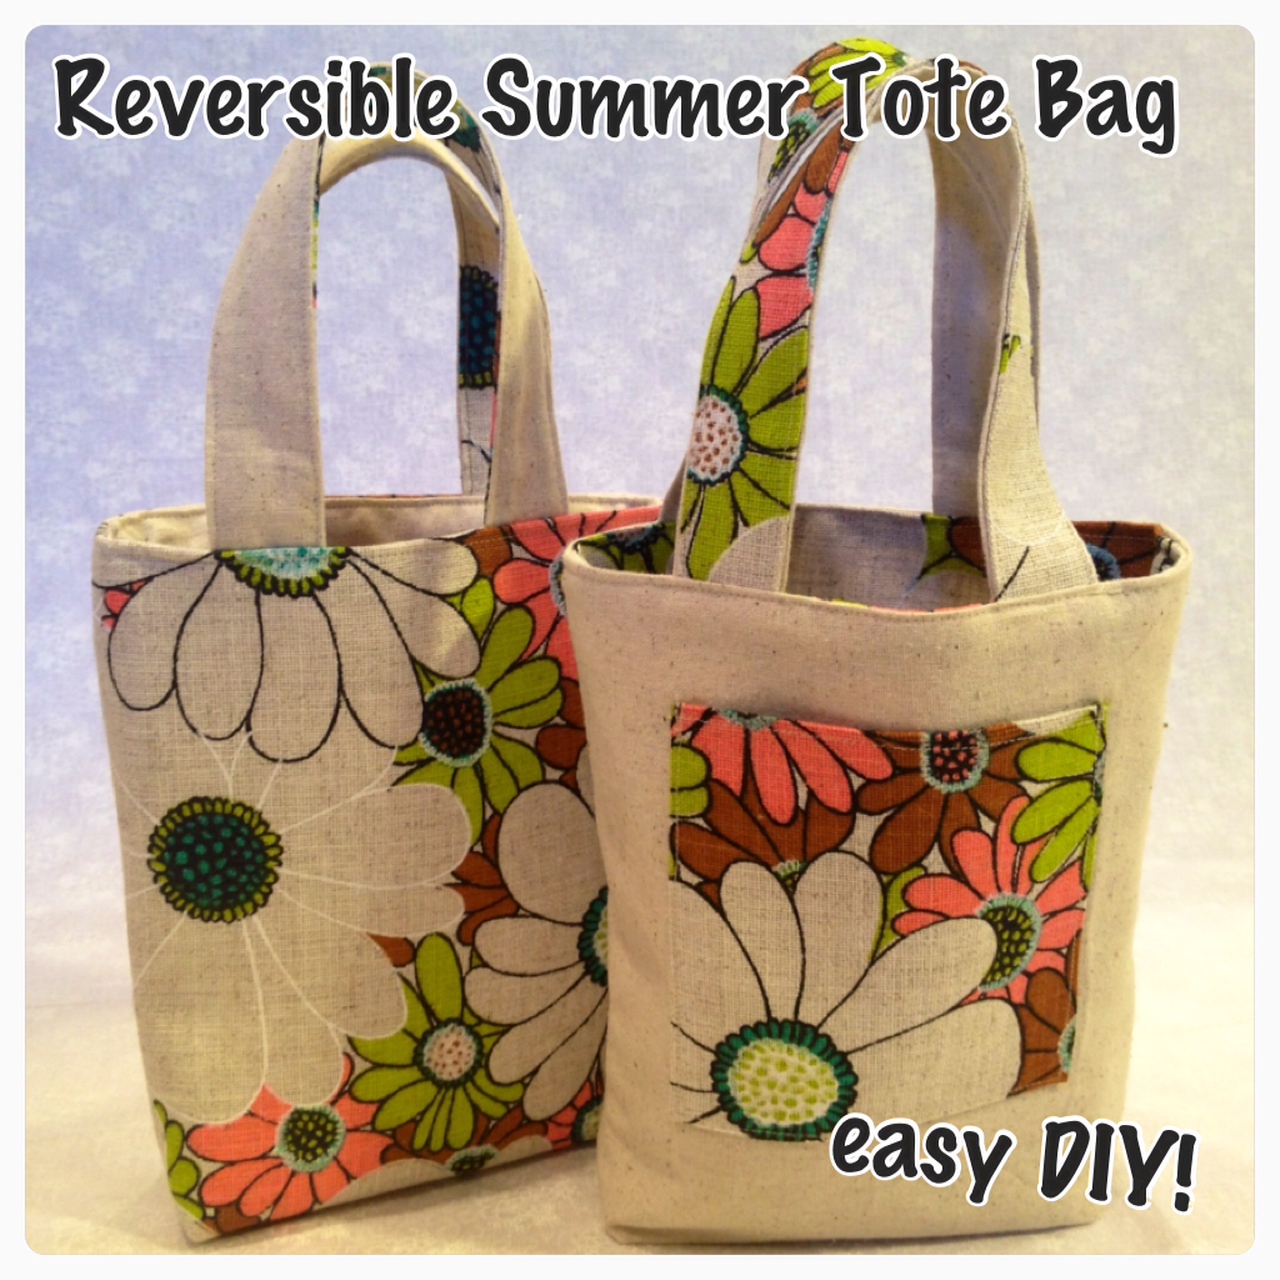 ... at 1280 Ã— 1280 in DIY: Super easy reversible bag pattern . Next